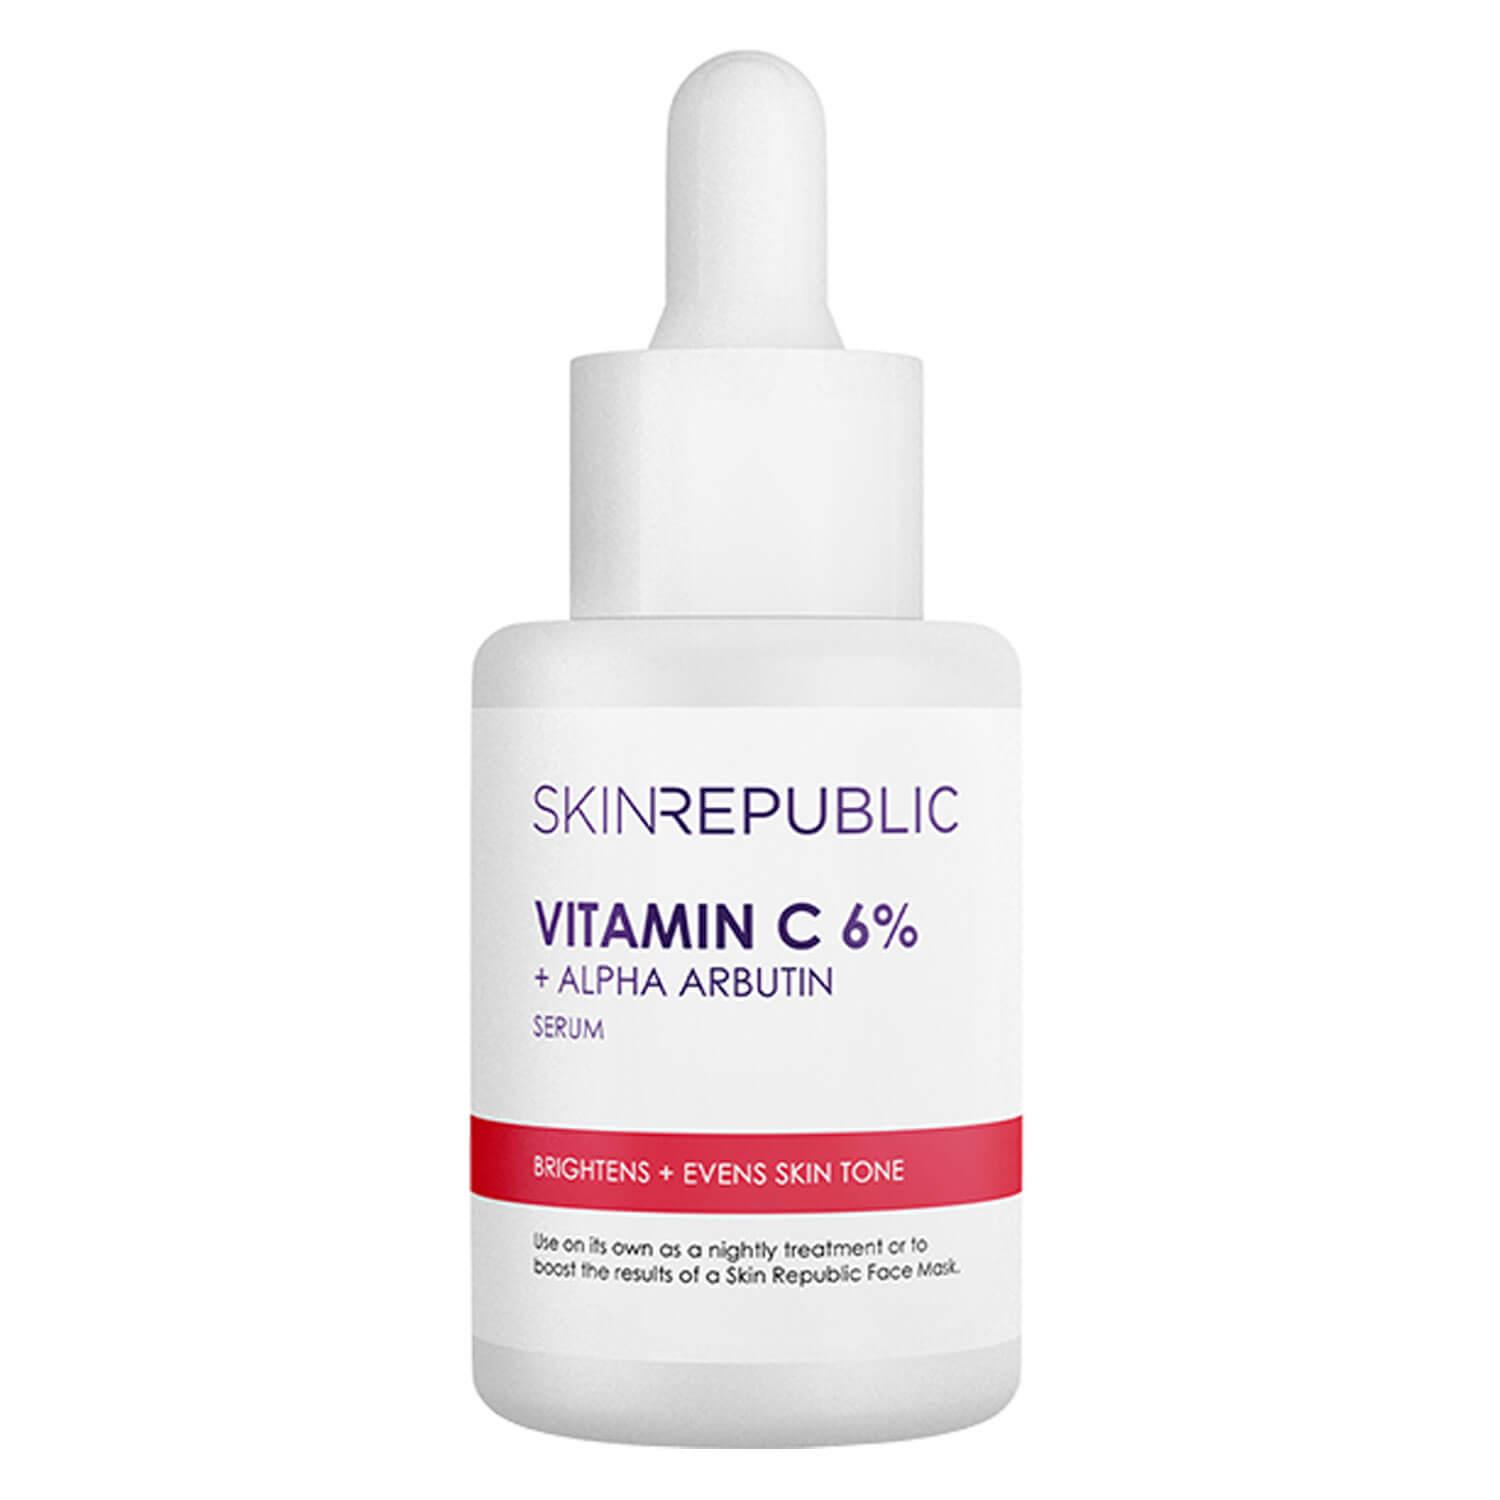 Skin Republic - Vitamin C 6% + Alpha Arbutin Serum